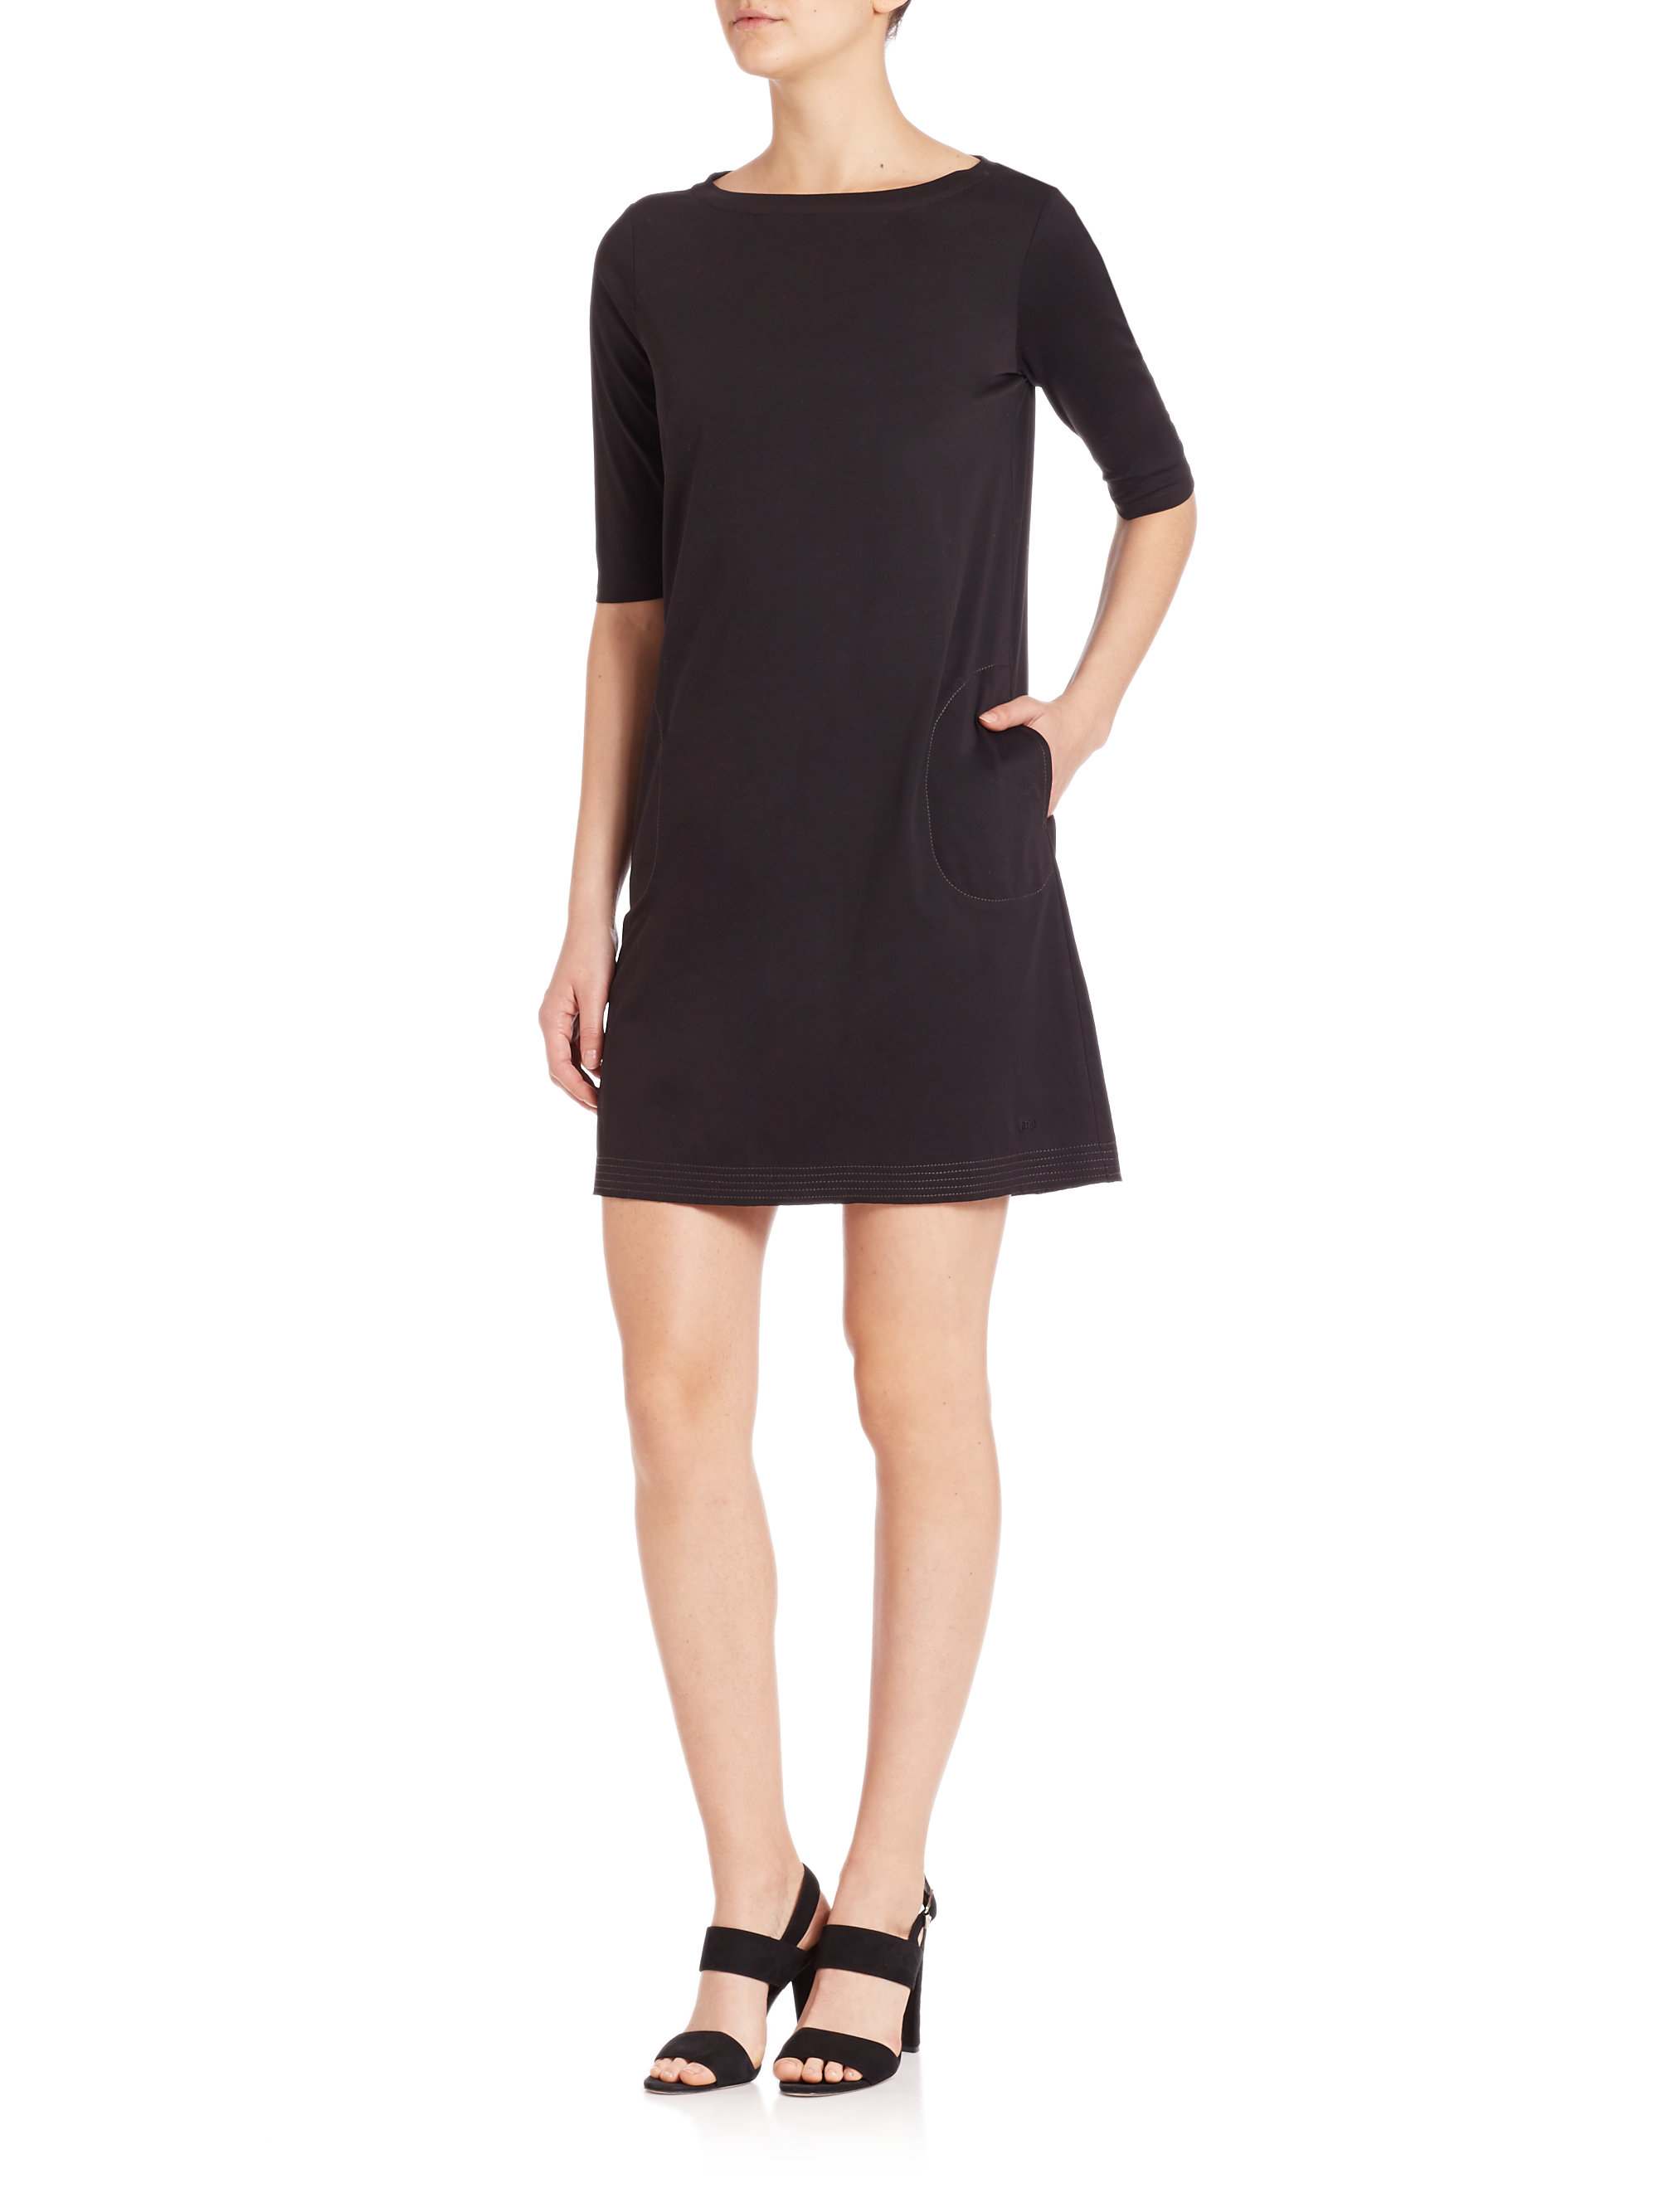 Lyst - Atm Cotton Jersey Shift Dress in Black